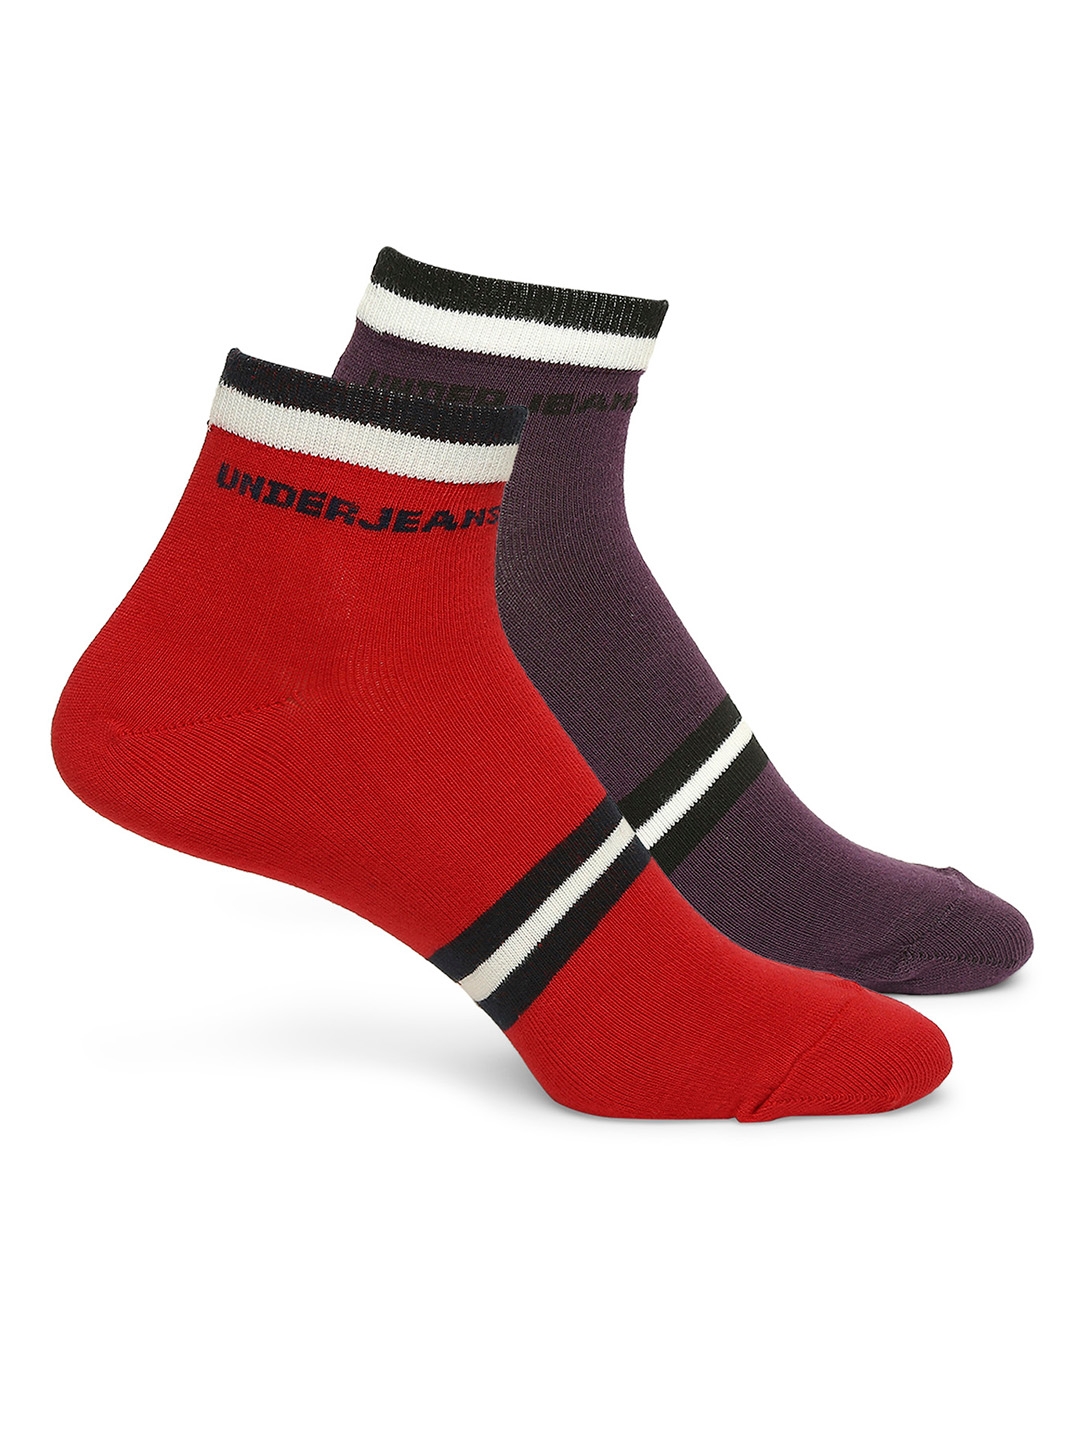 Underjeans by Spykar Premium Purple & Red Ankle Length Socks - Pack Of 2